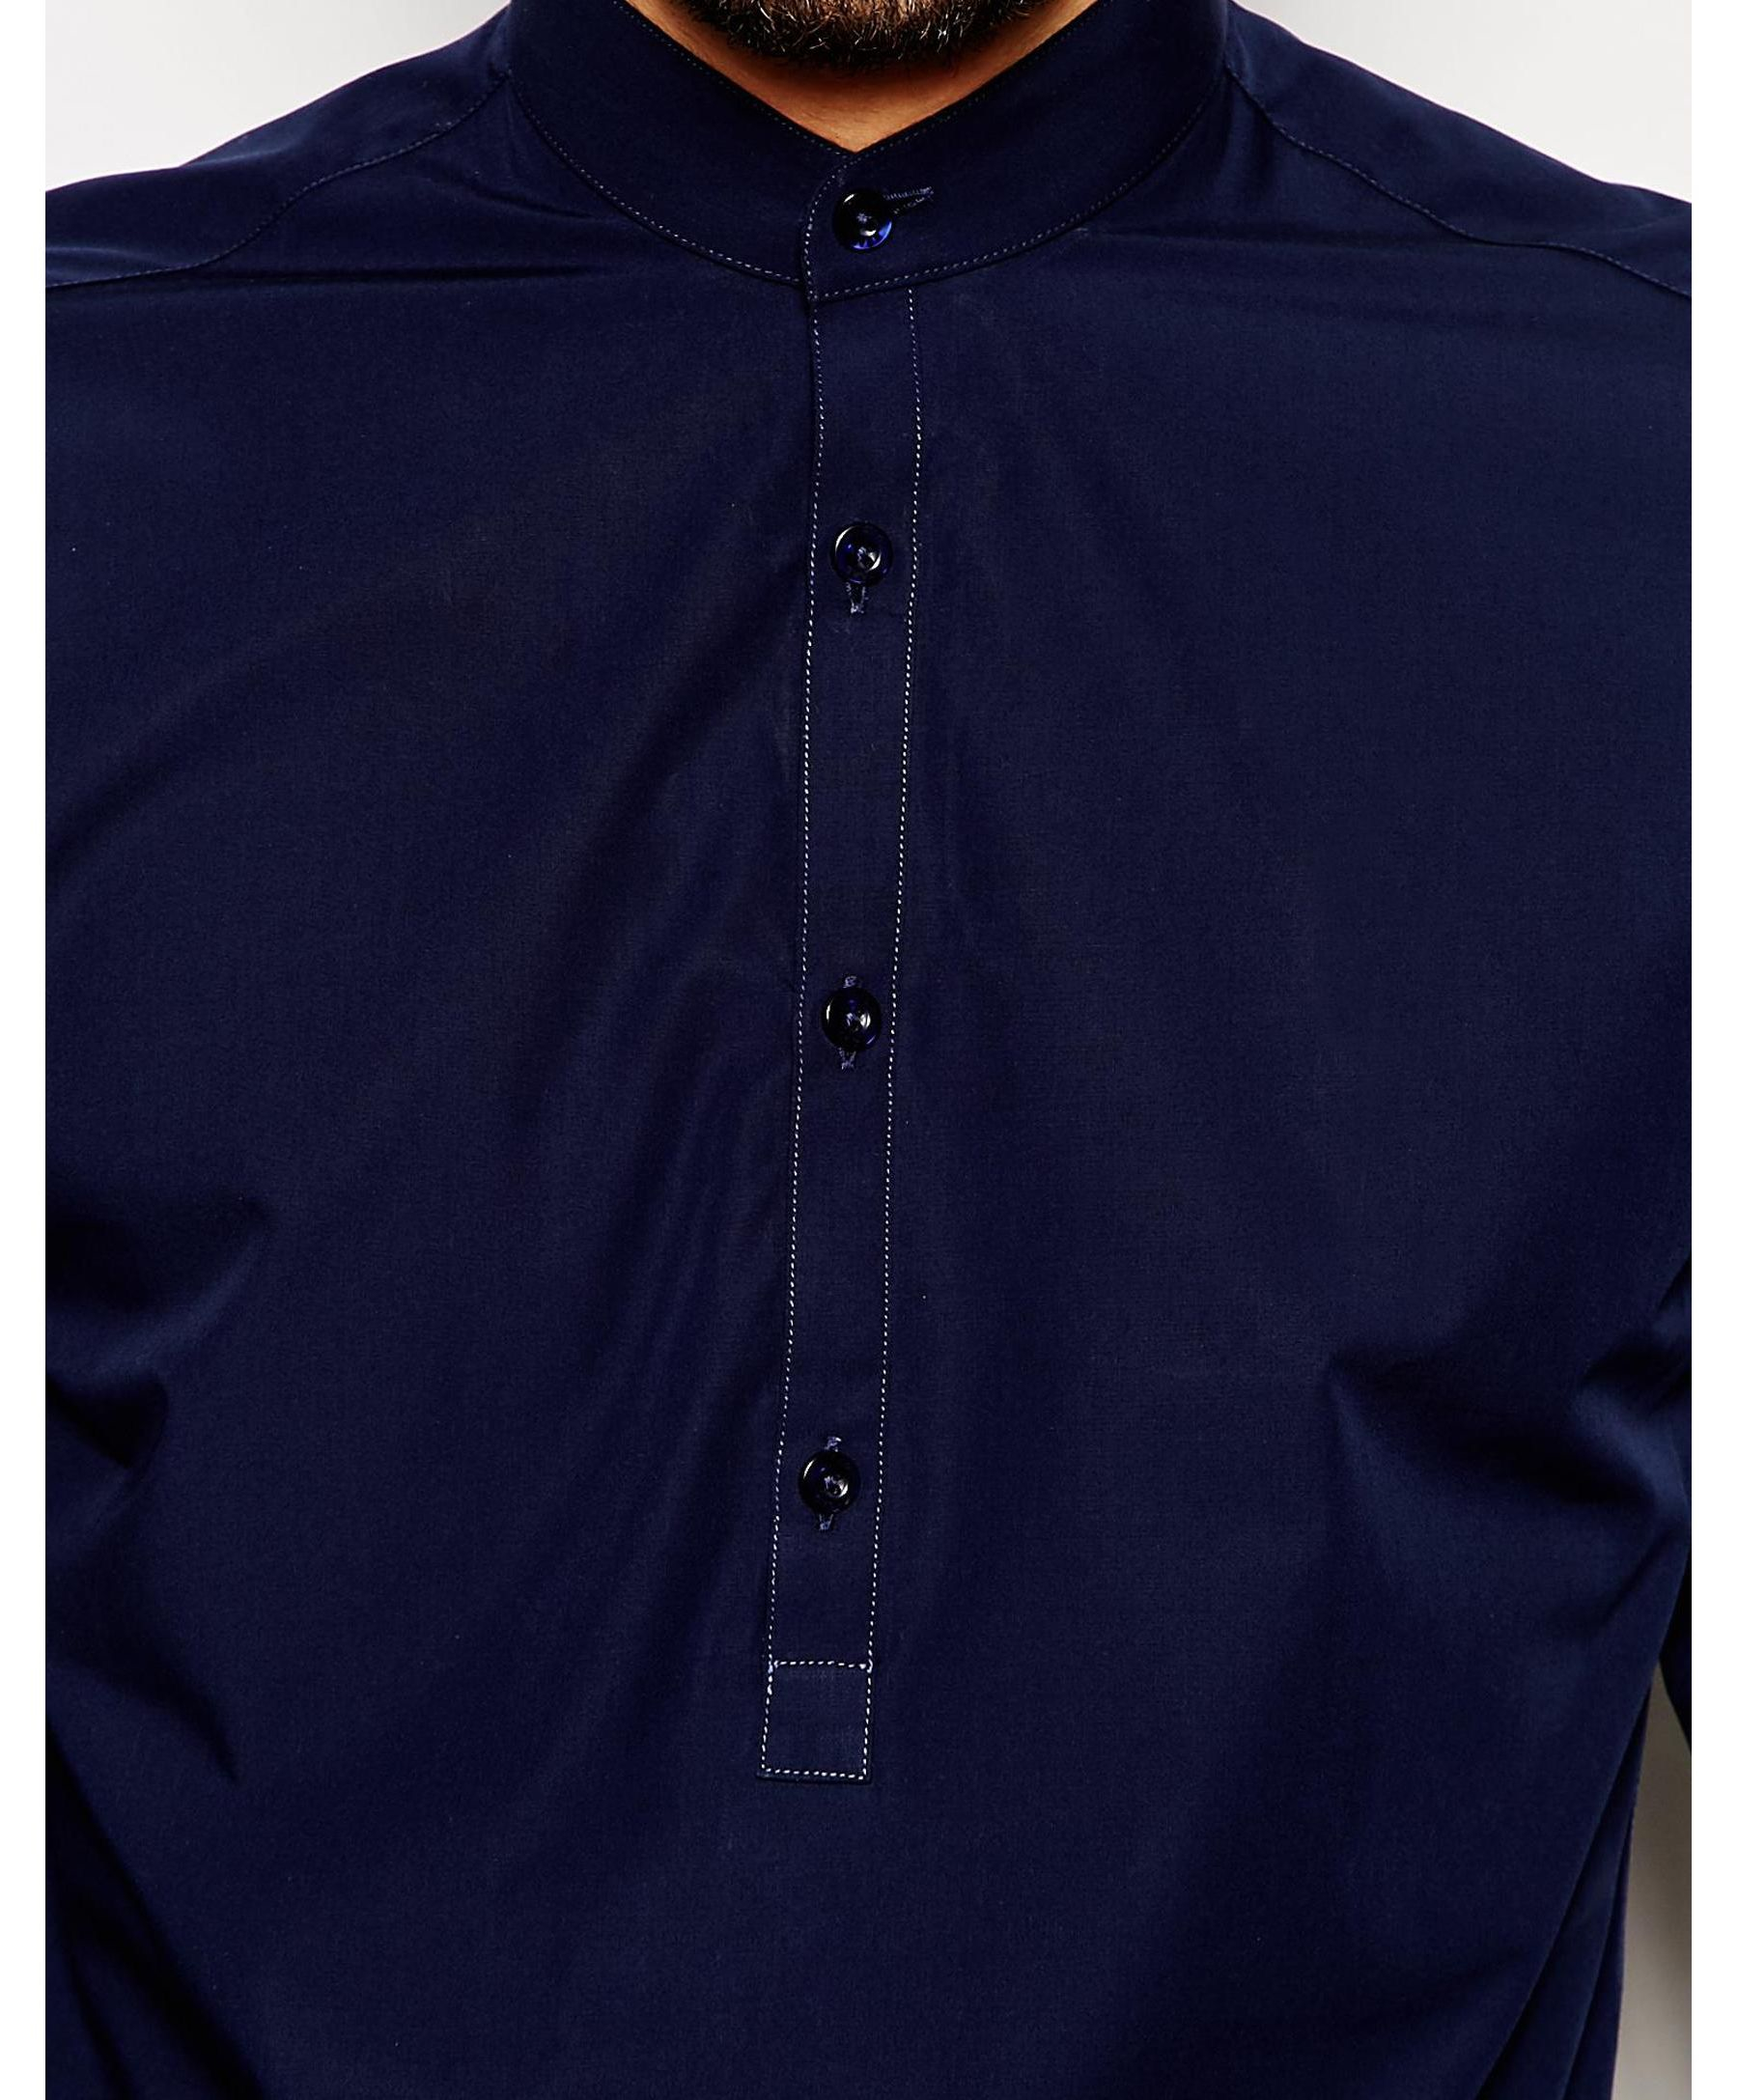 Lyst - Noak Grandad Shirt With Half Placket In Skinny Fit in Blue for Men